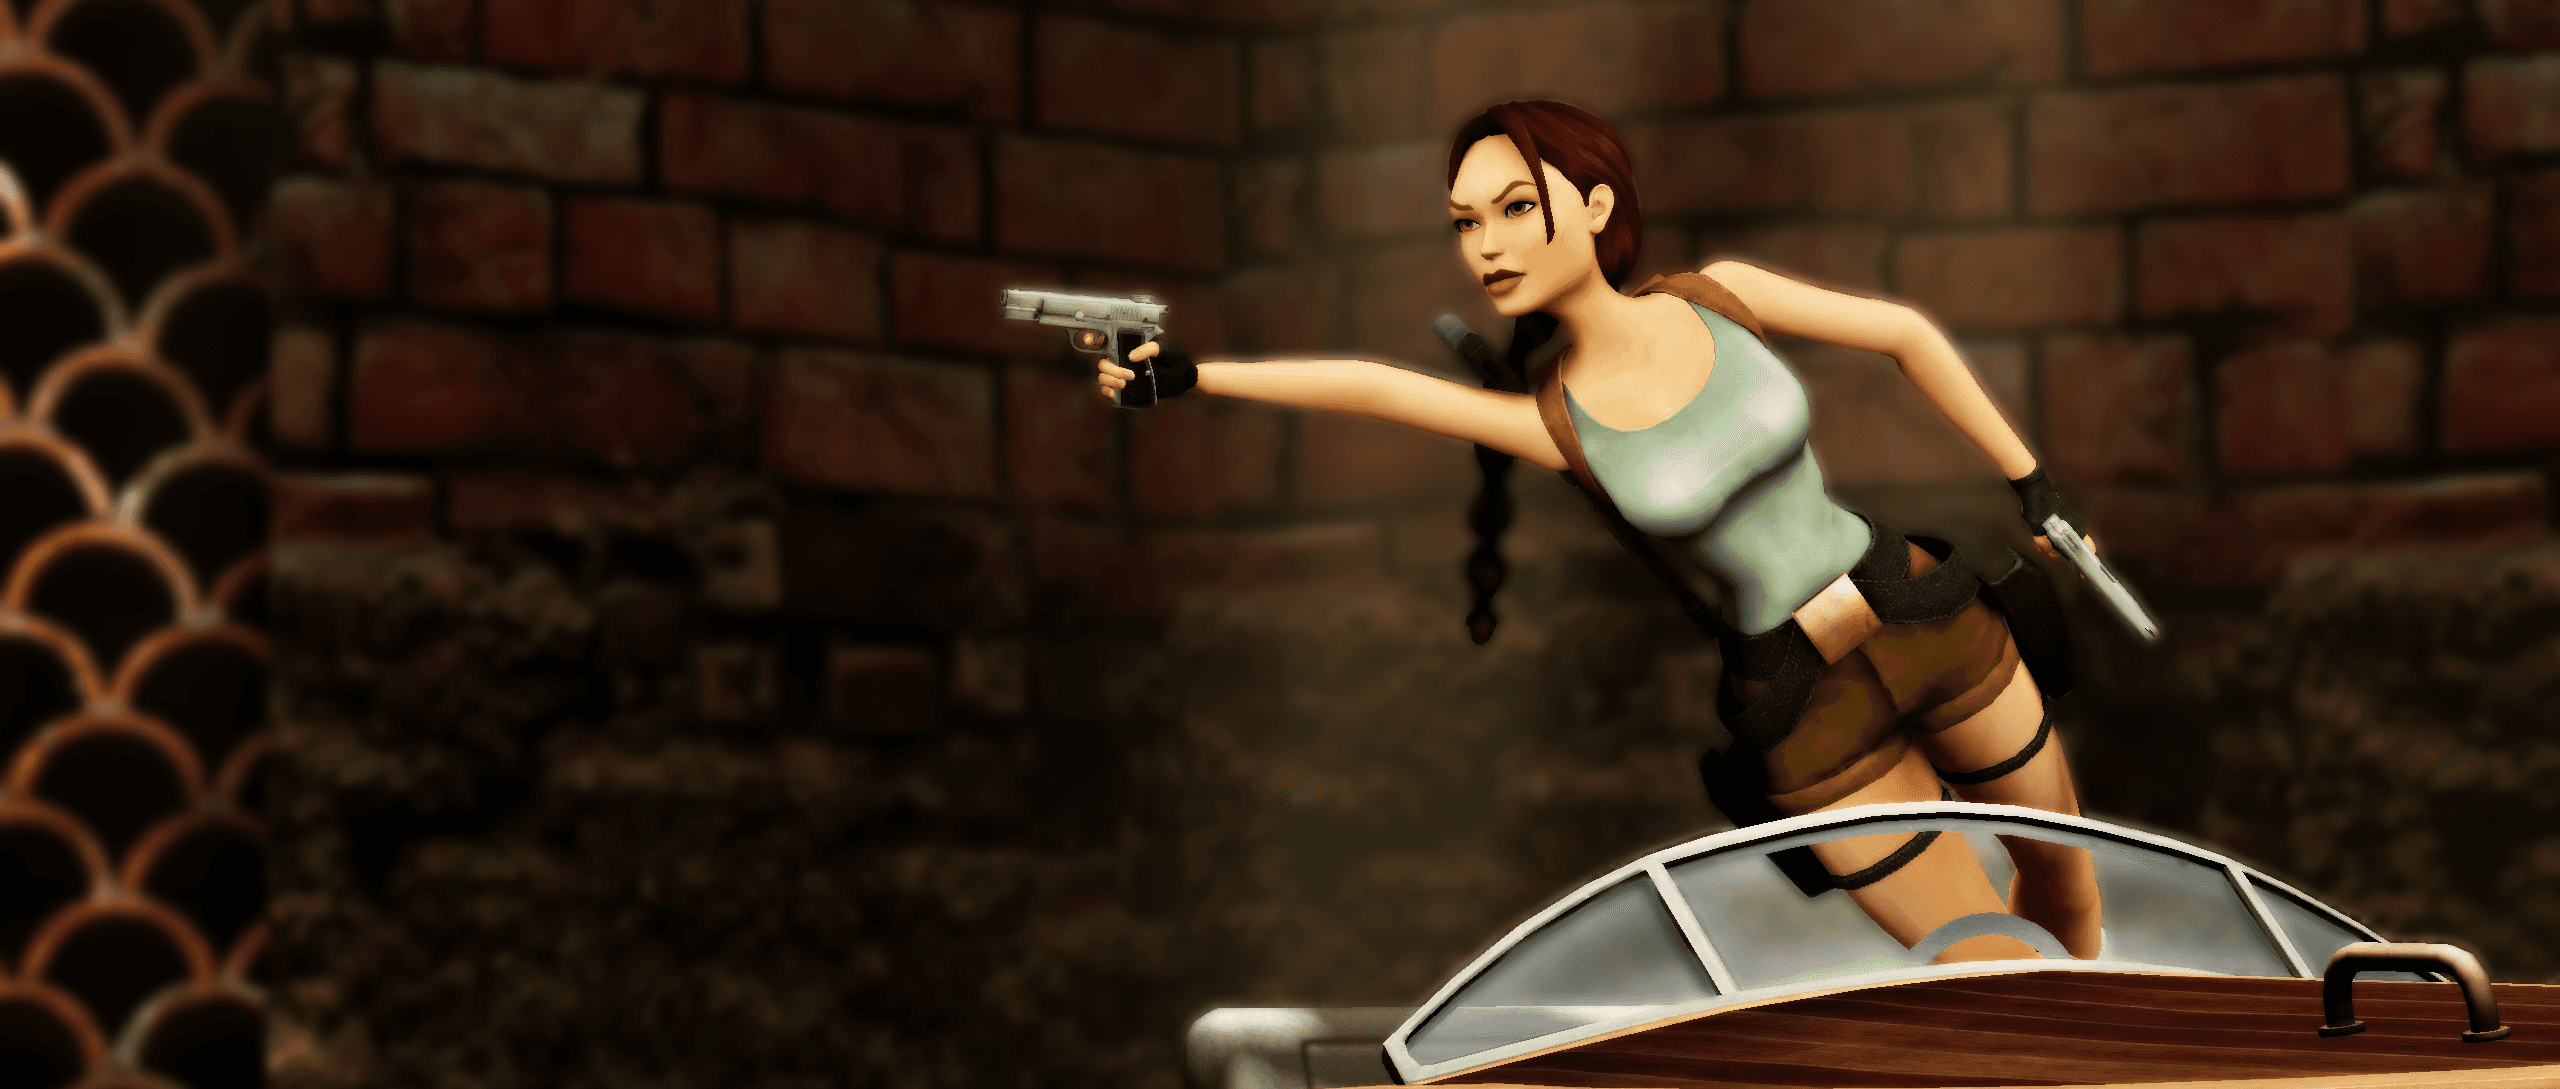 Photo Mode shot of Lara Croft in a speedboat in Tomb Raider I-III Remastered.